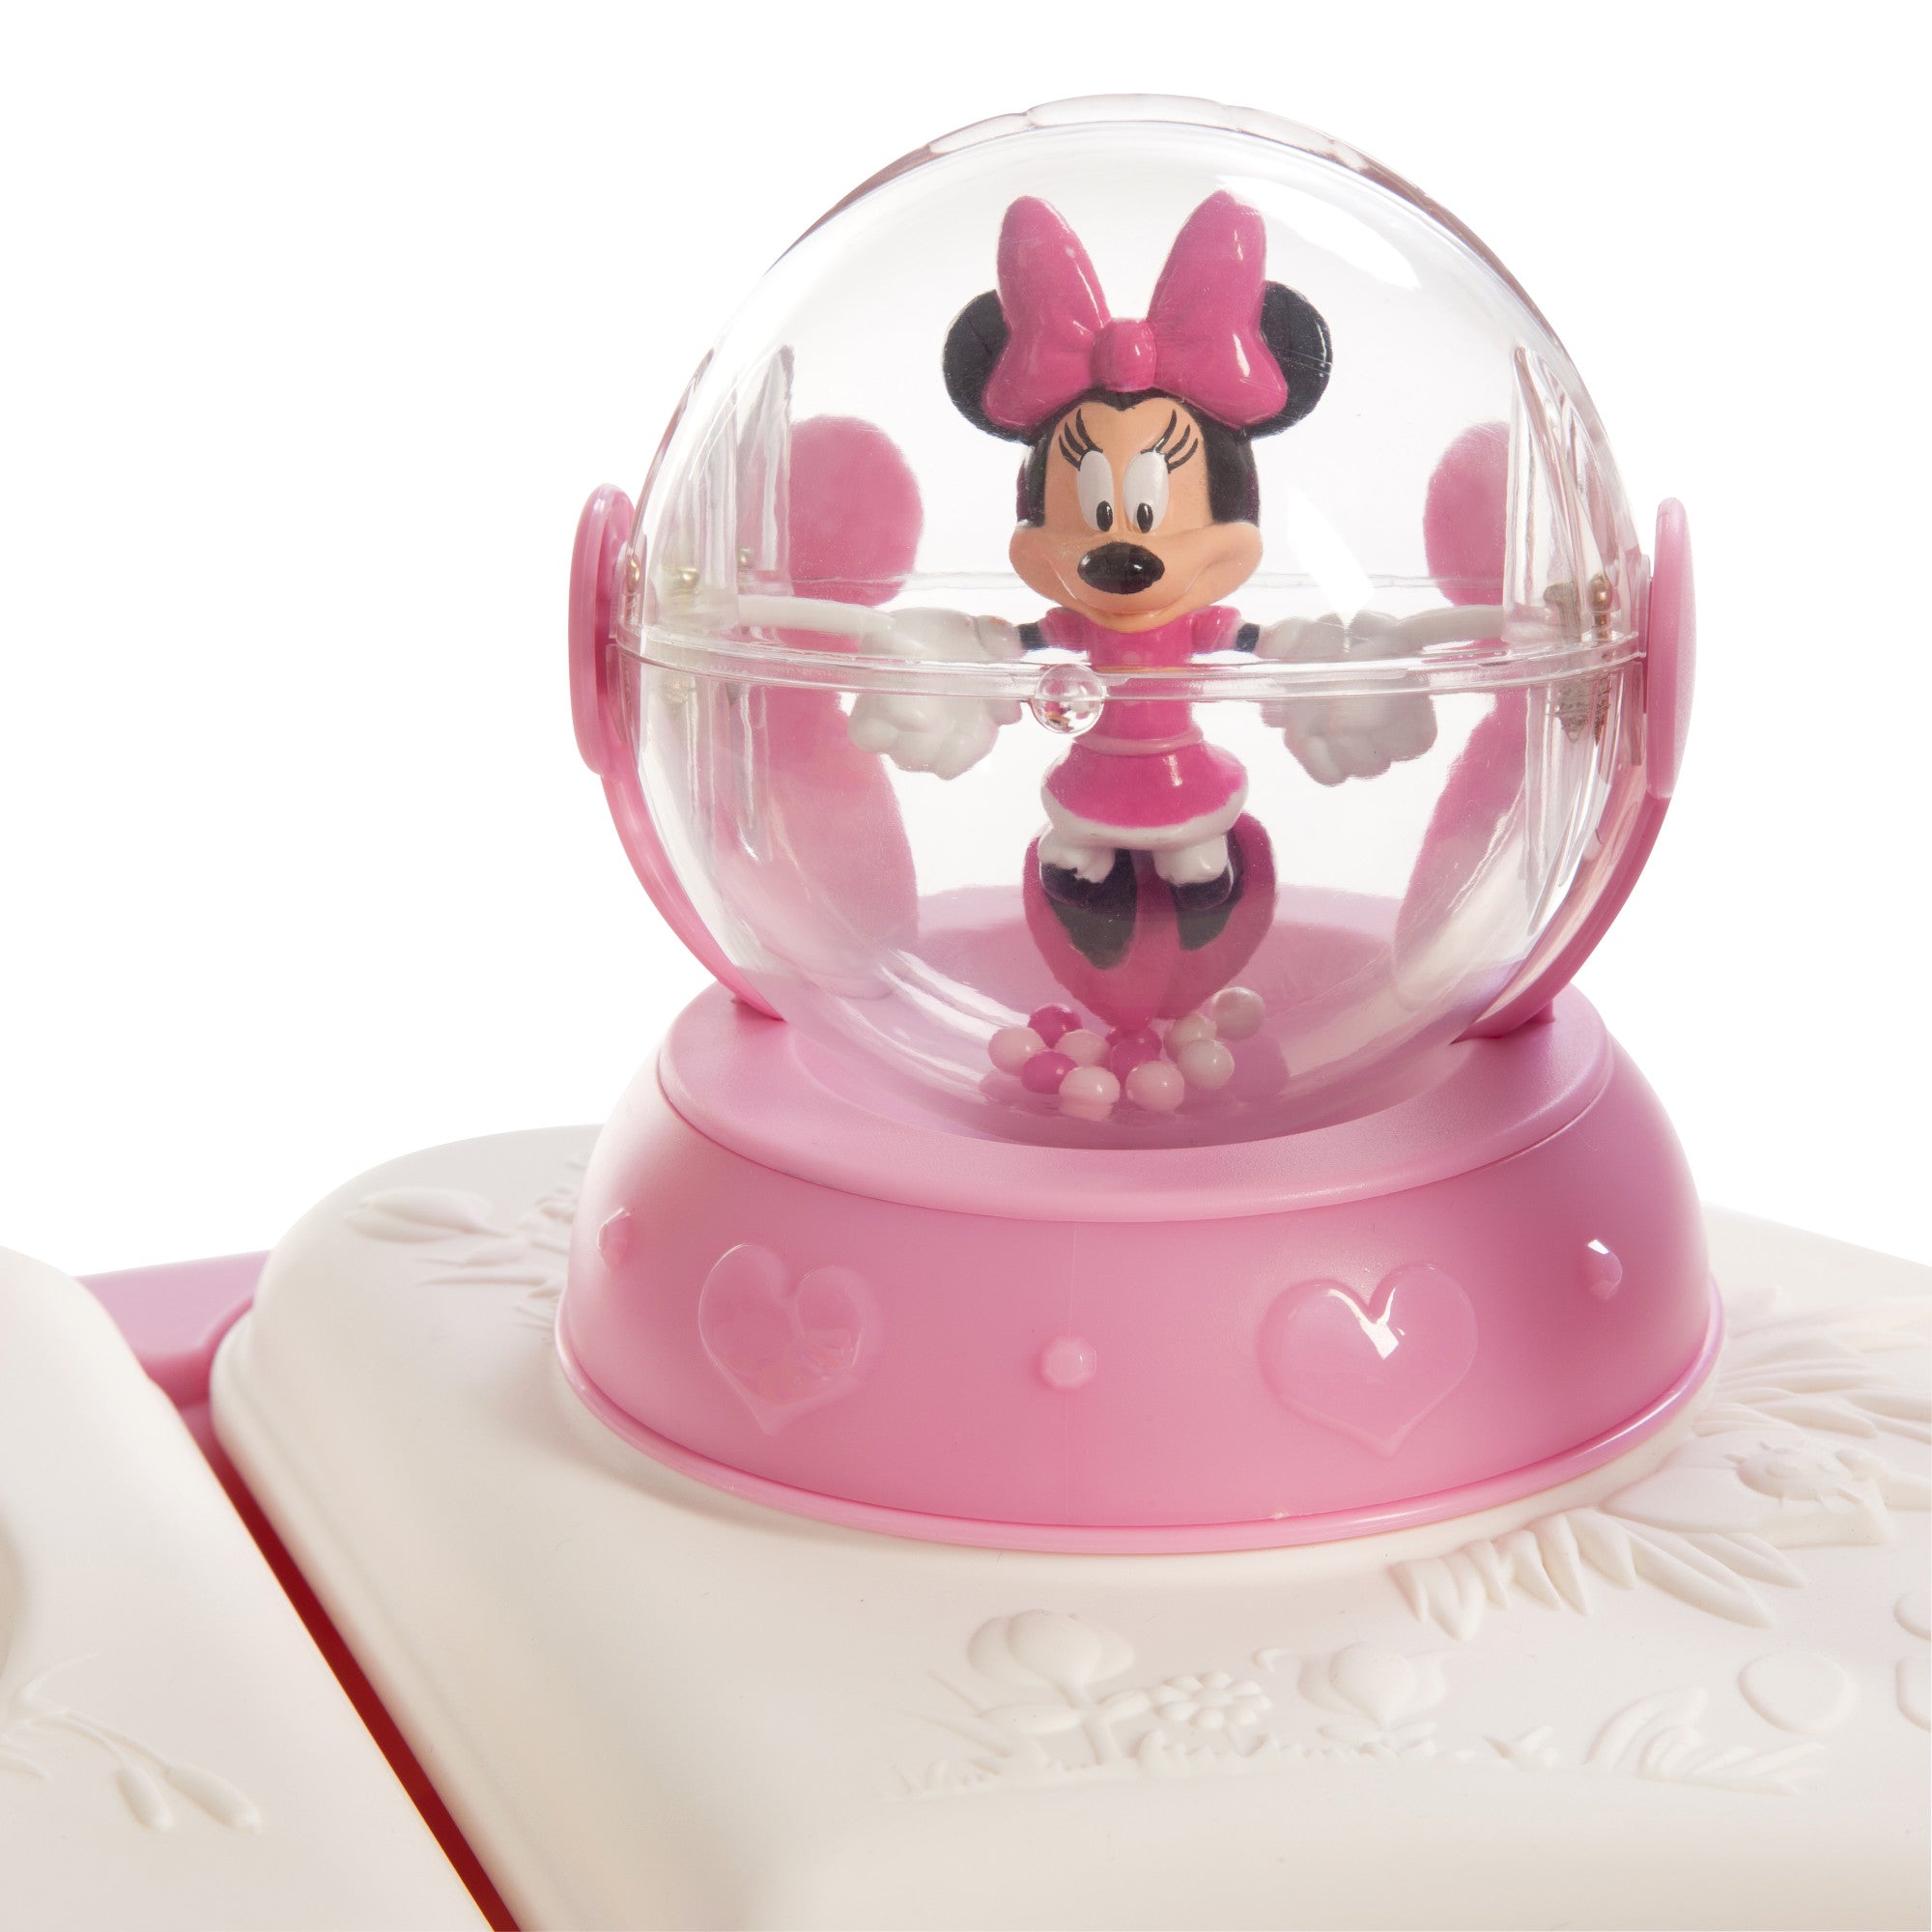 Disney Baby Music & Lights™ Walker - toy detail